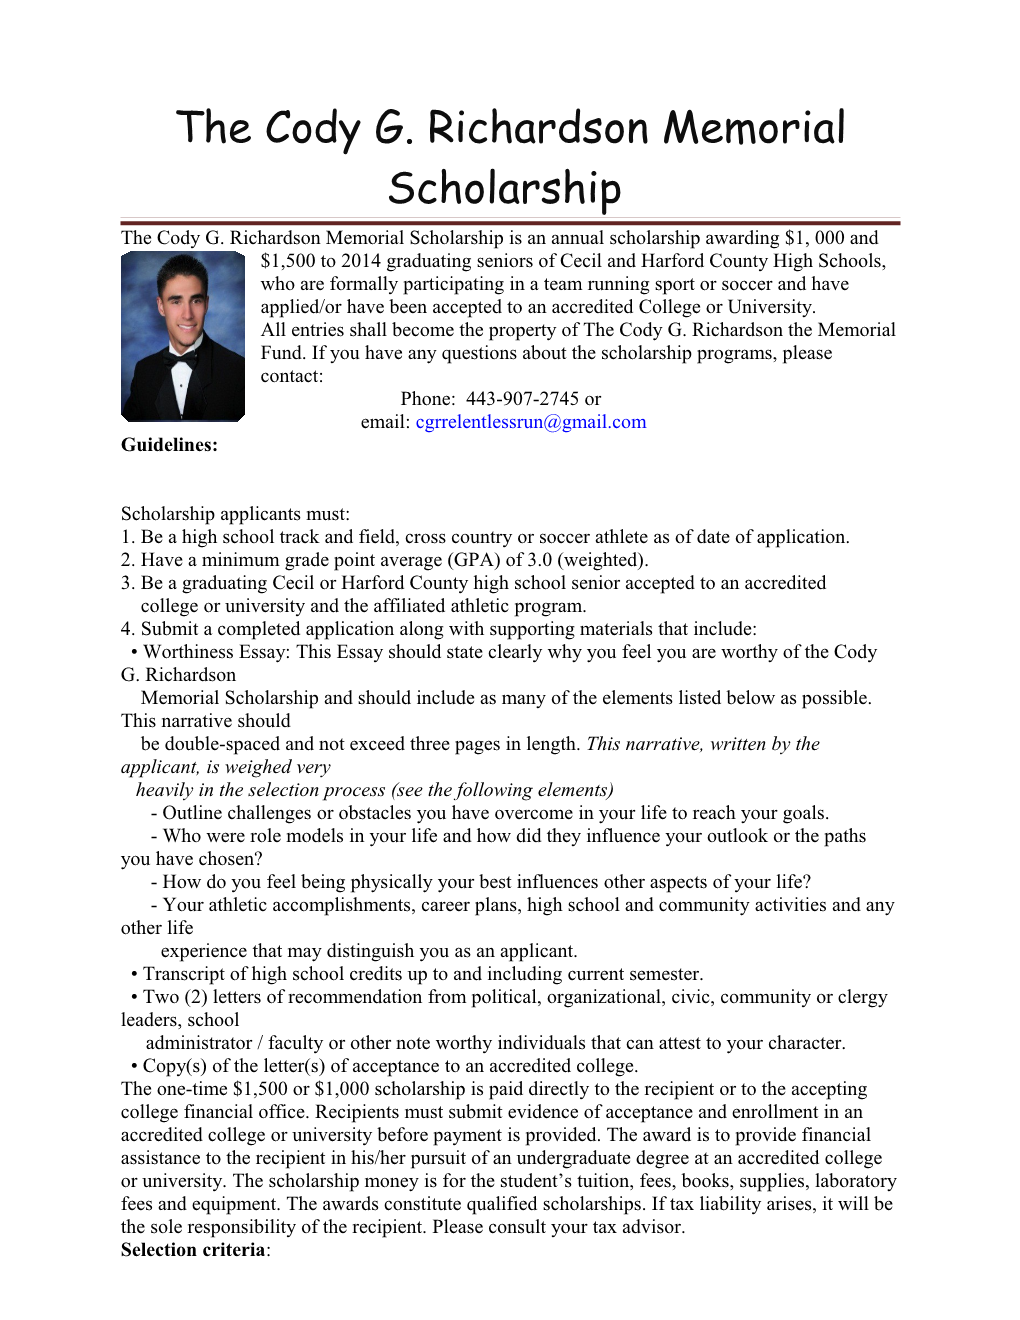 The Cody G. Richardson Memorial Scholarship